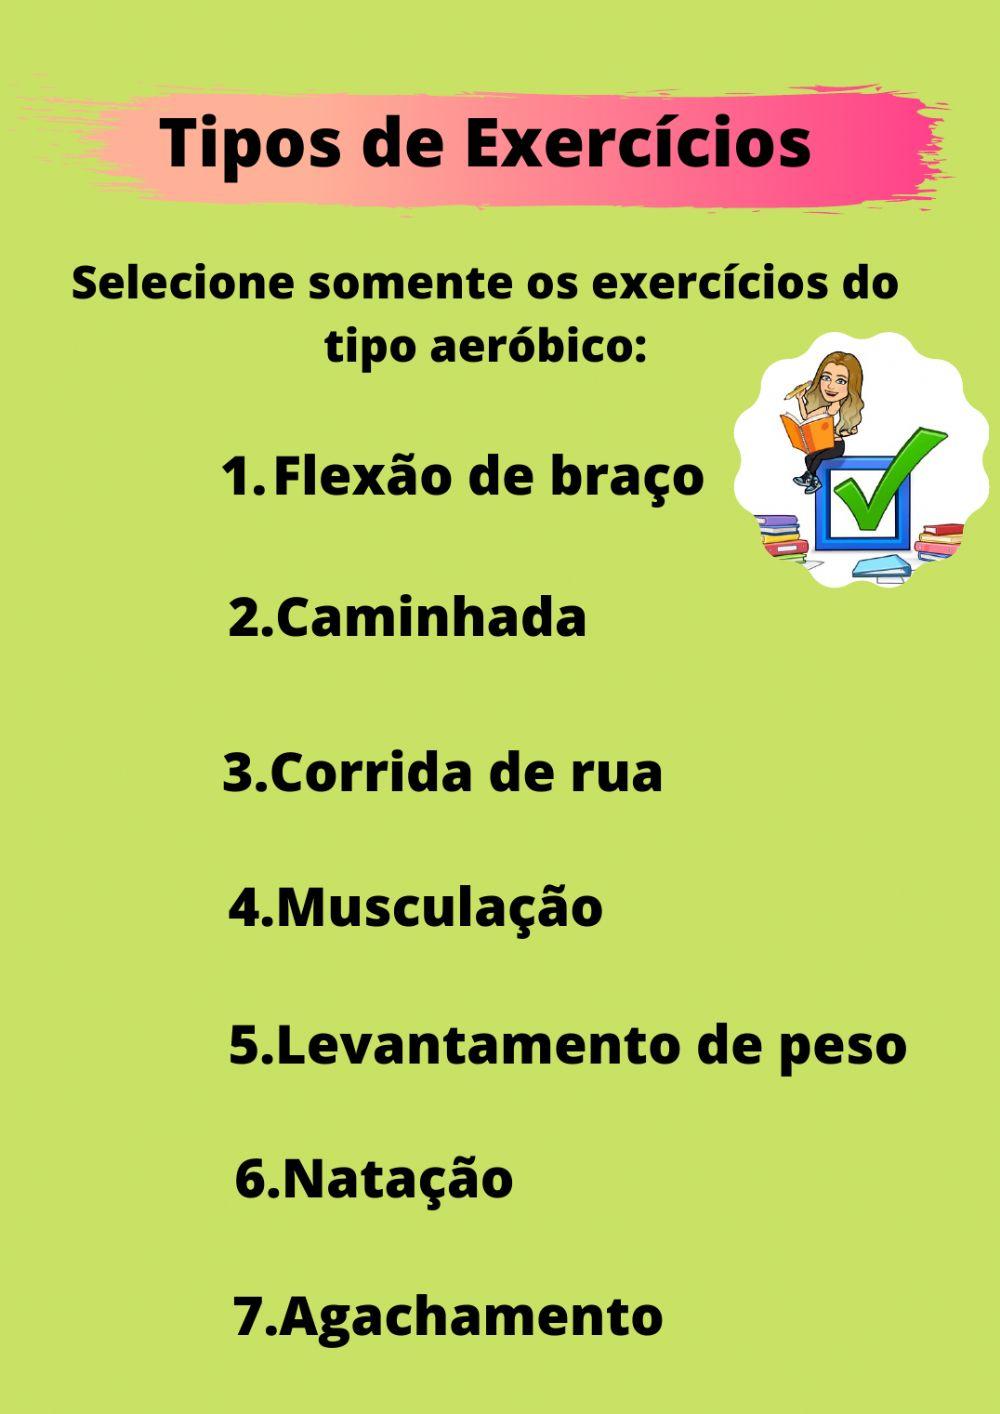 Tipos de exercícios